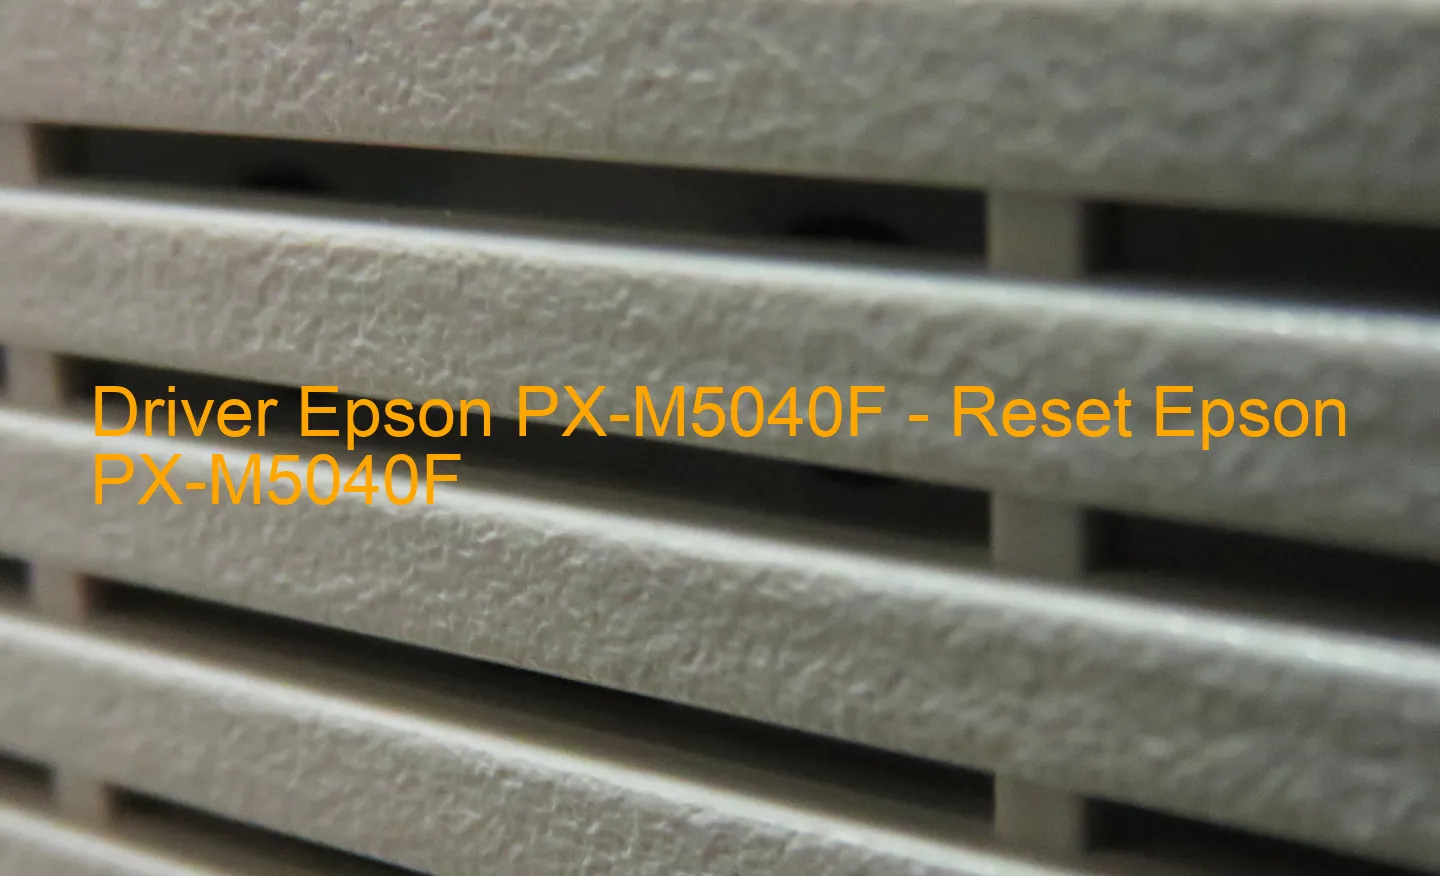 Epson PX-M5040Fのドライバー、Epson PX-M5040Fのリセットソフトウェア